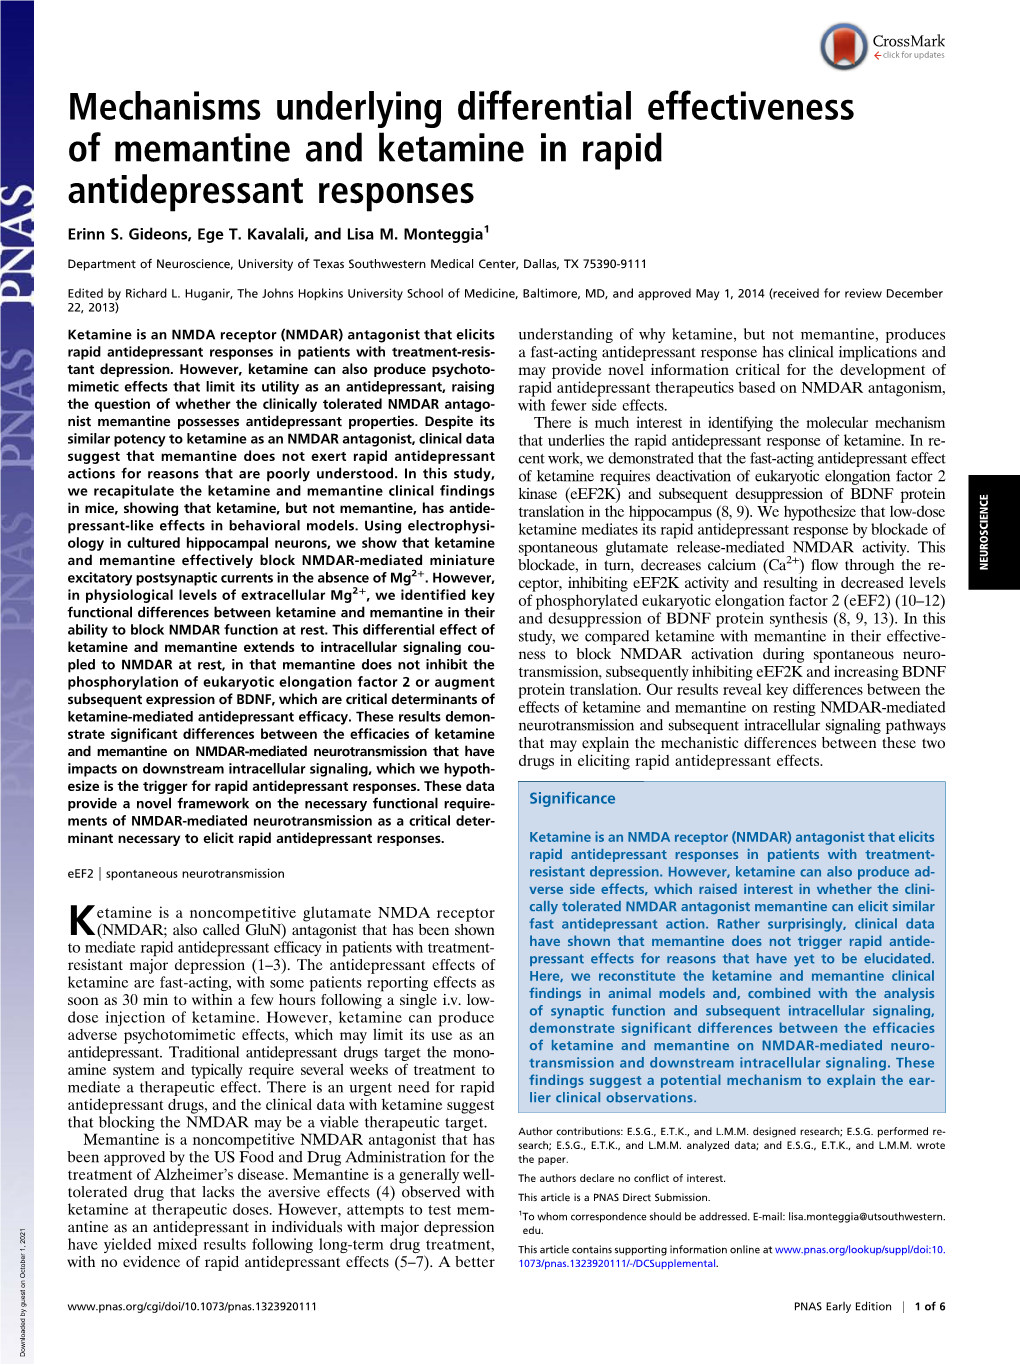 Mechanisms Underlying Differential Effectiveness of Memantine and Ketamine in Rapid Antidepressant Responses